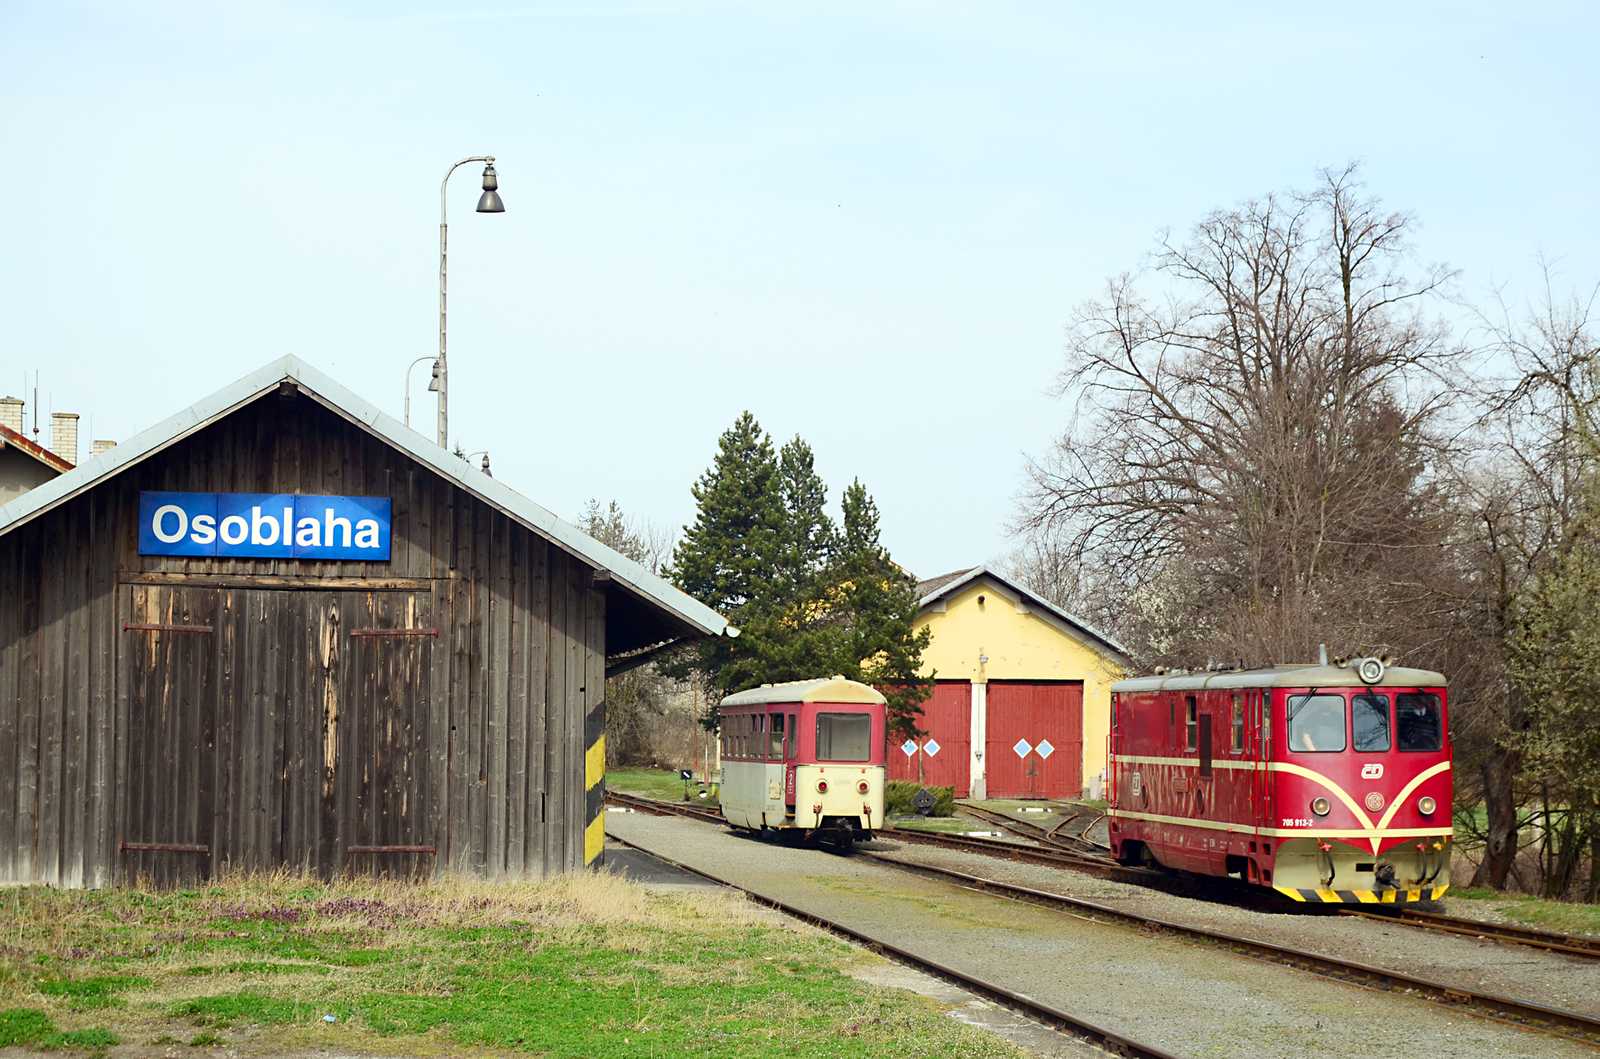 Der Lokschuppen in Osoblaha (Hotzenplotz) entstand 1898.